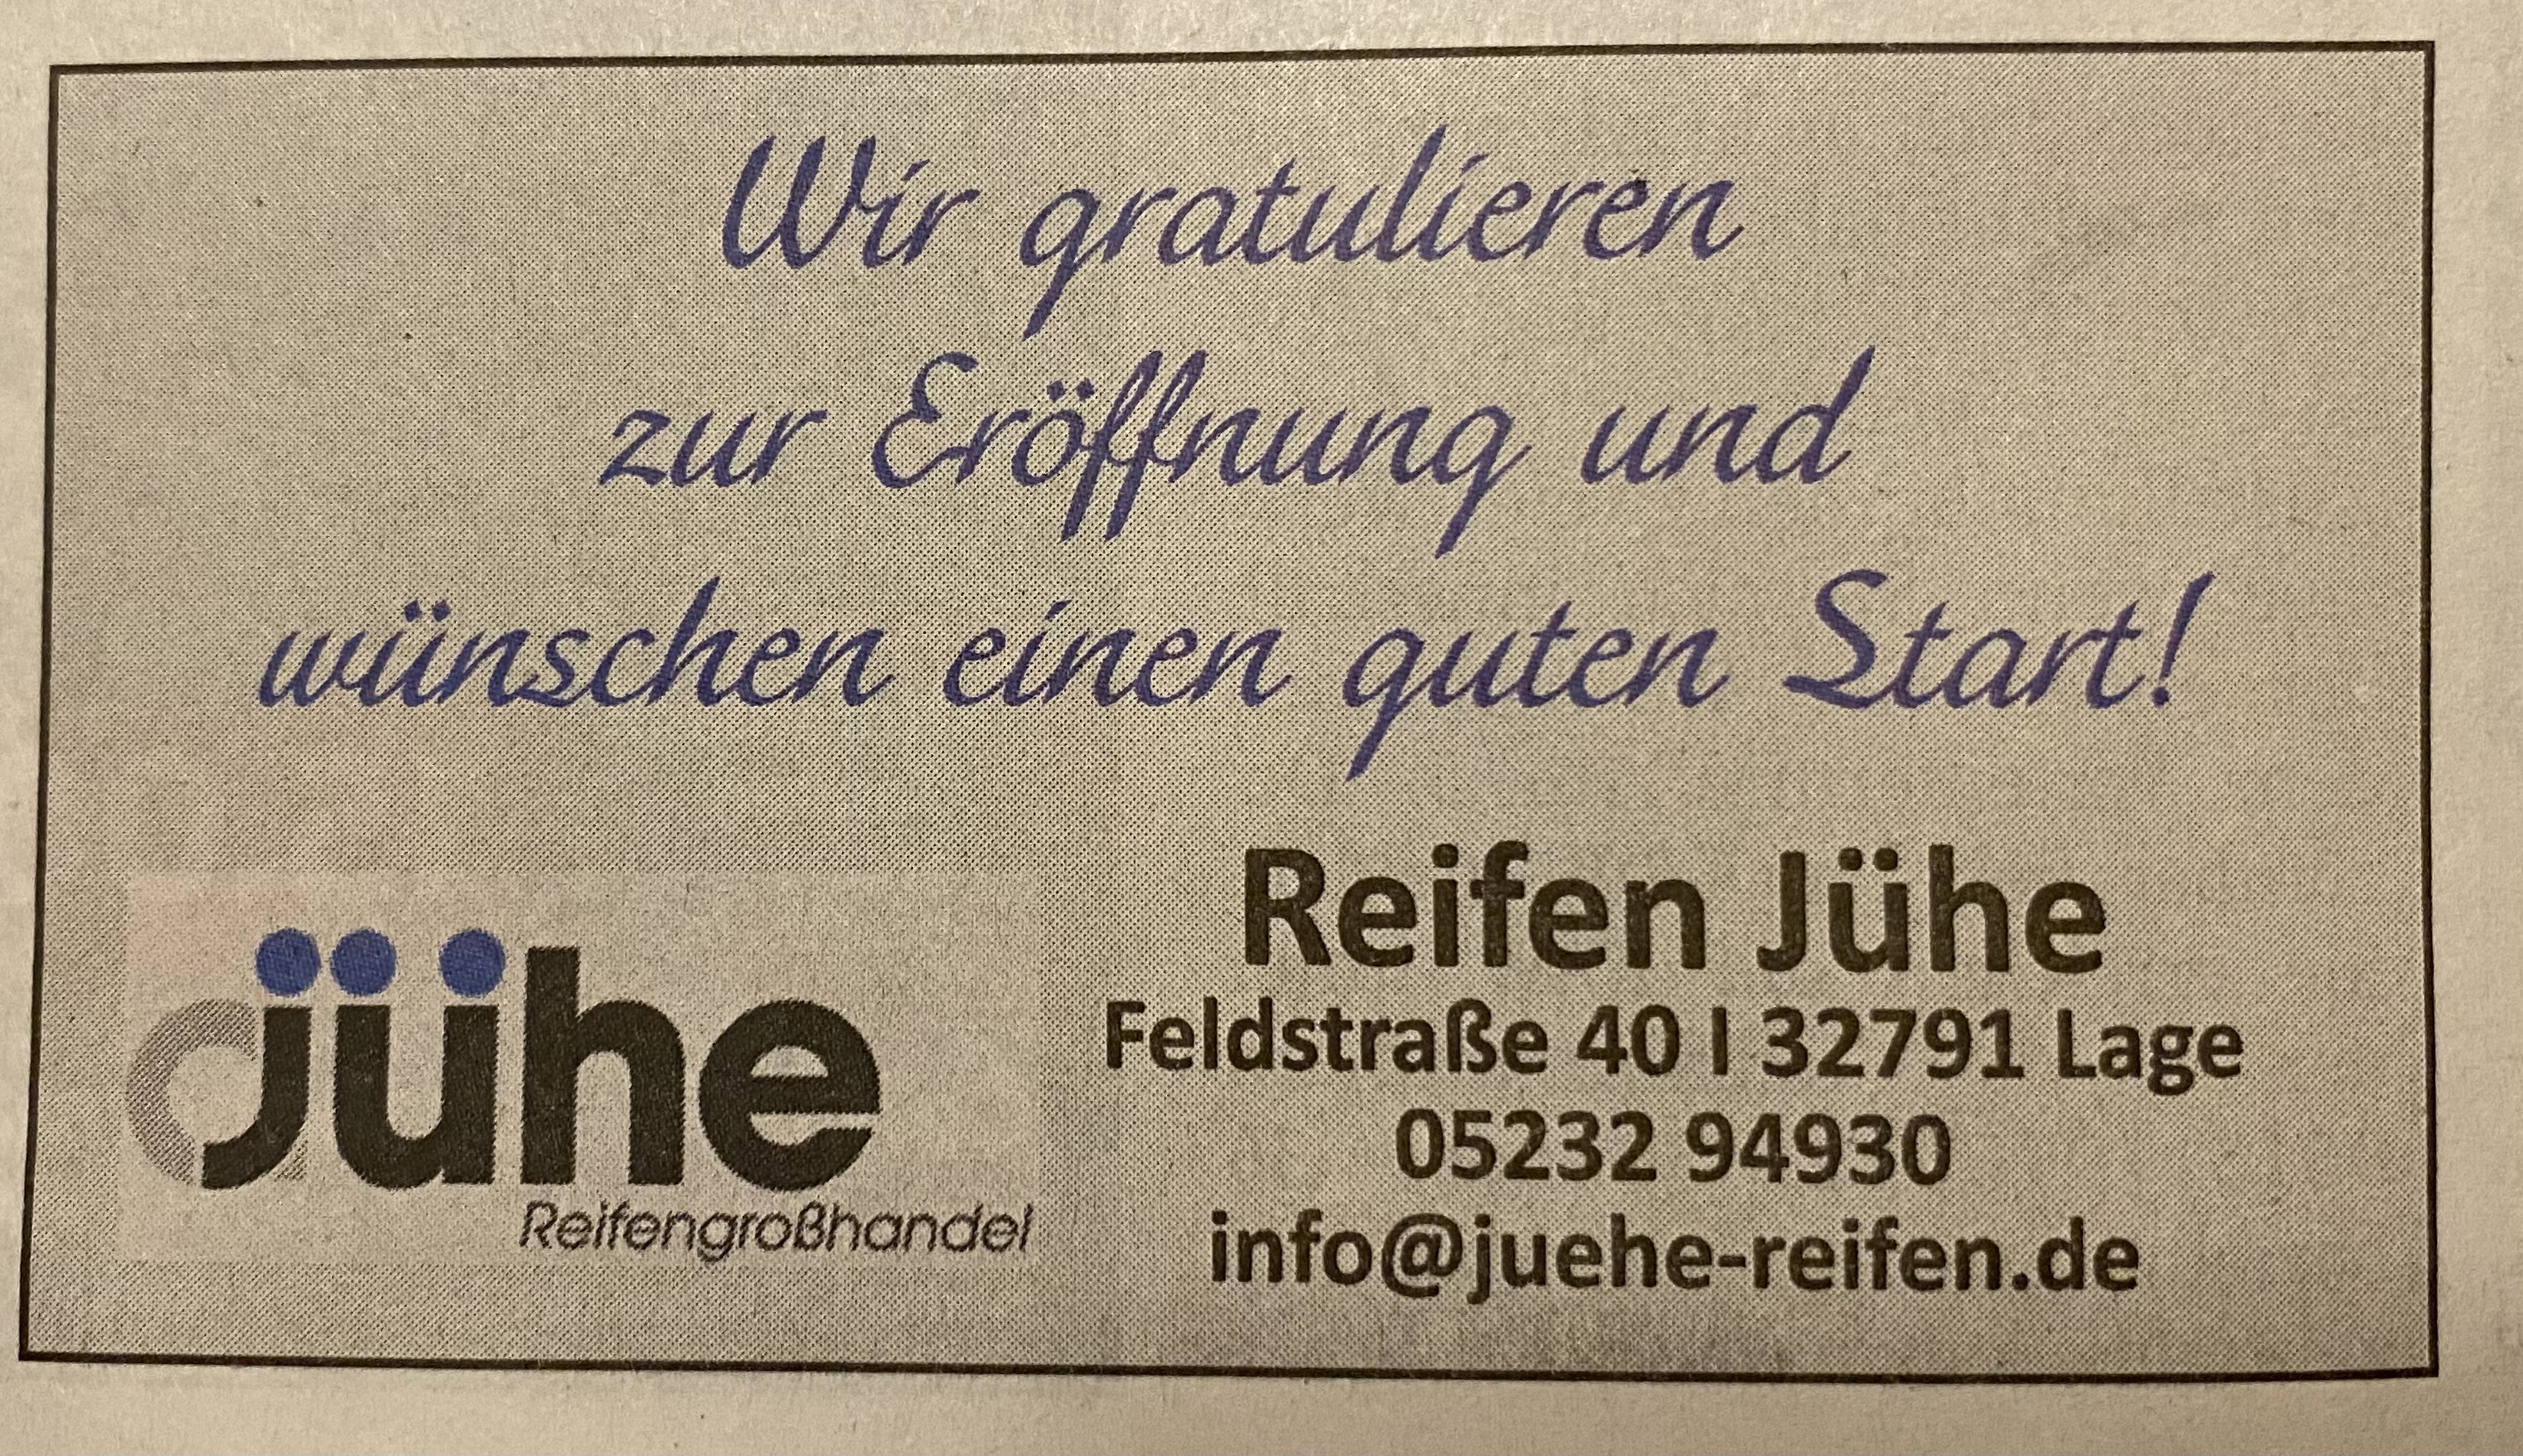 Reifengroßhandel A. Jühe GmbH in 32791 Lage